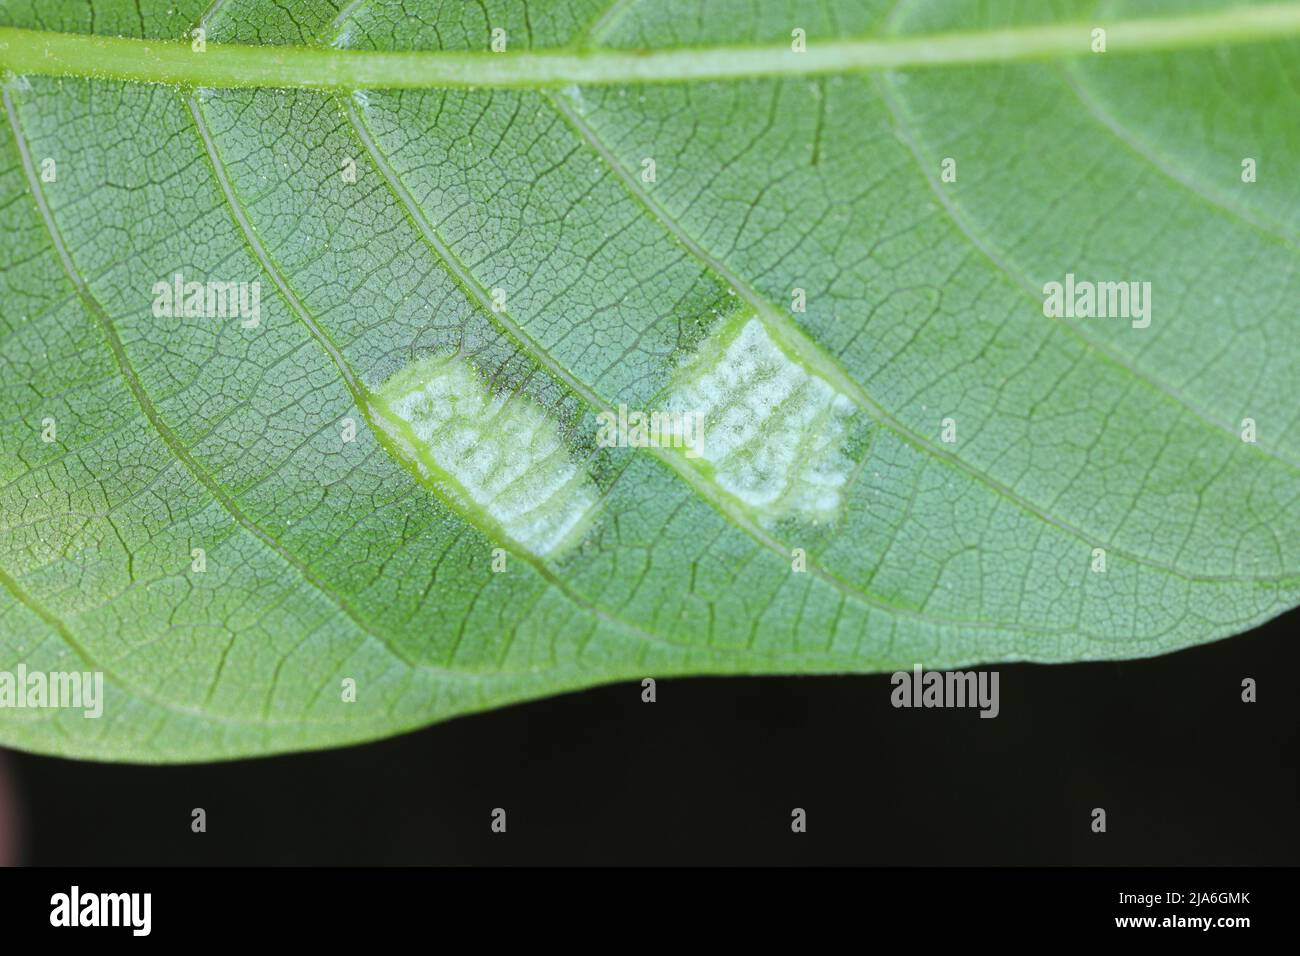 walnut leaf gall mite, Persian walnut leaf blister mite (Aceria tristriatus, Eriophyes erineus), galls on a walnut leaf Stock Photo